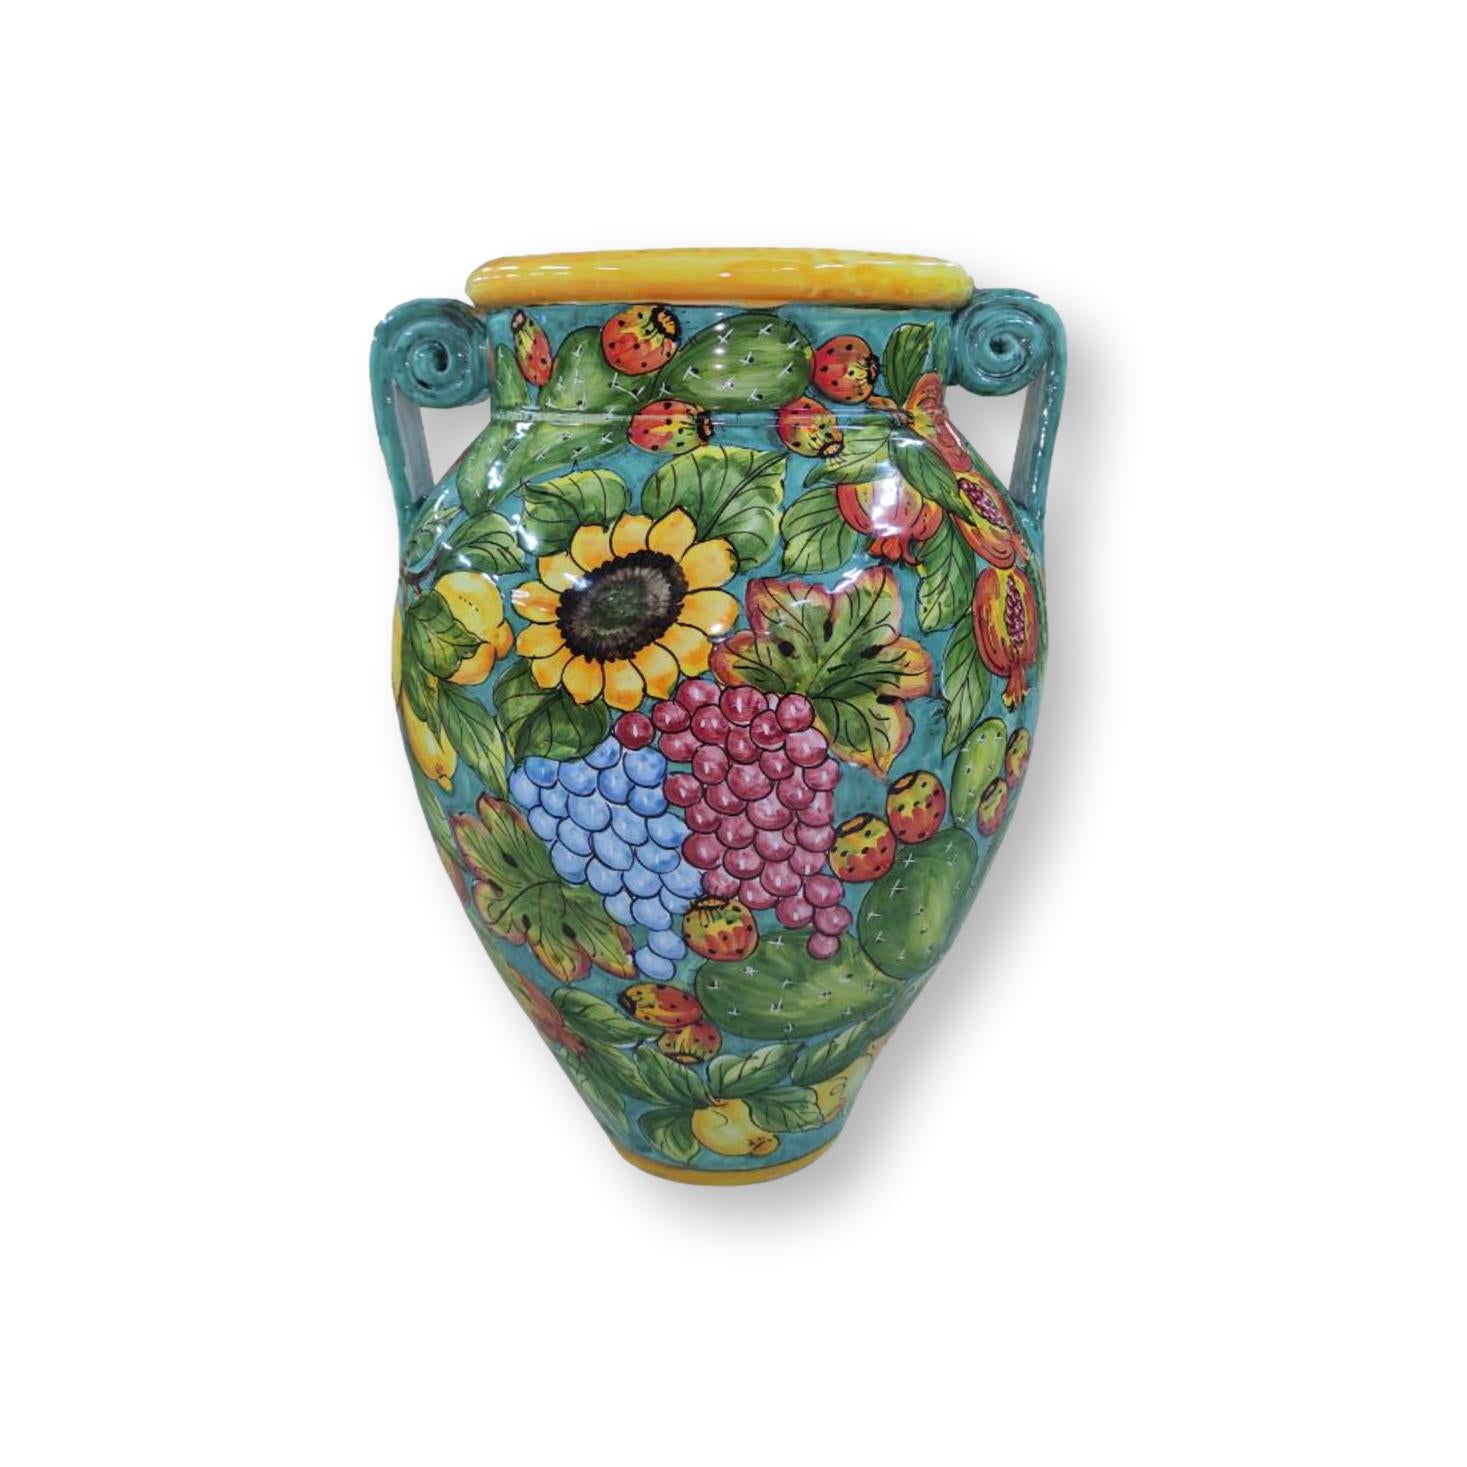 Giara in ceramica dipinta a mano - Ornata con frutta e girasoli con manici